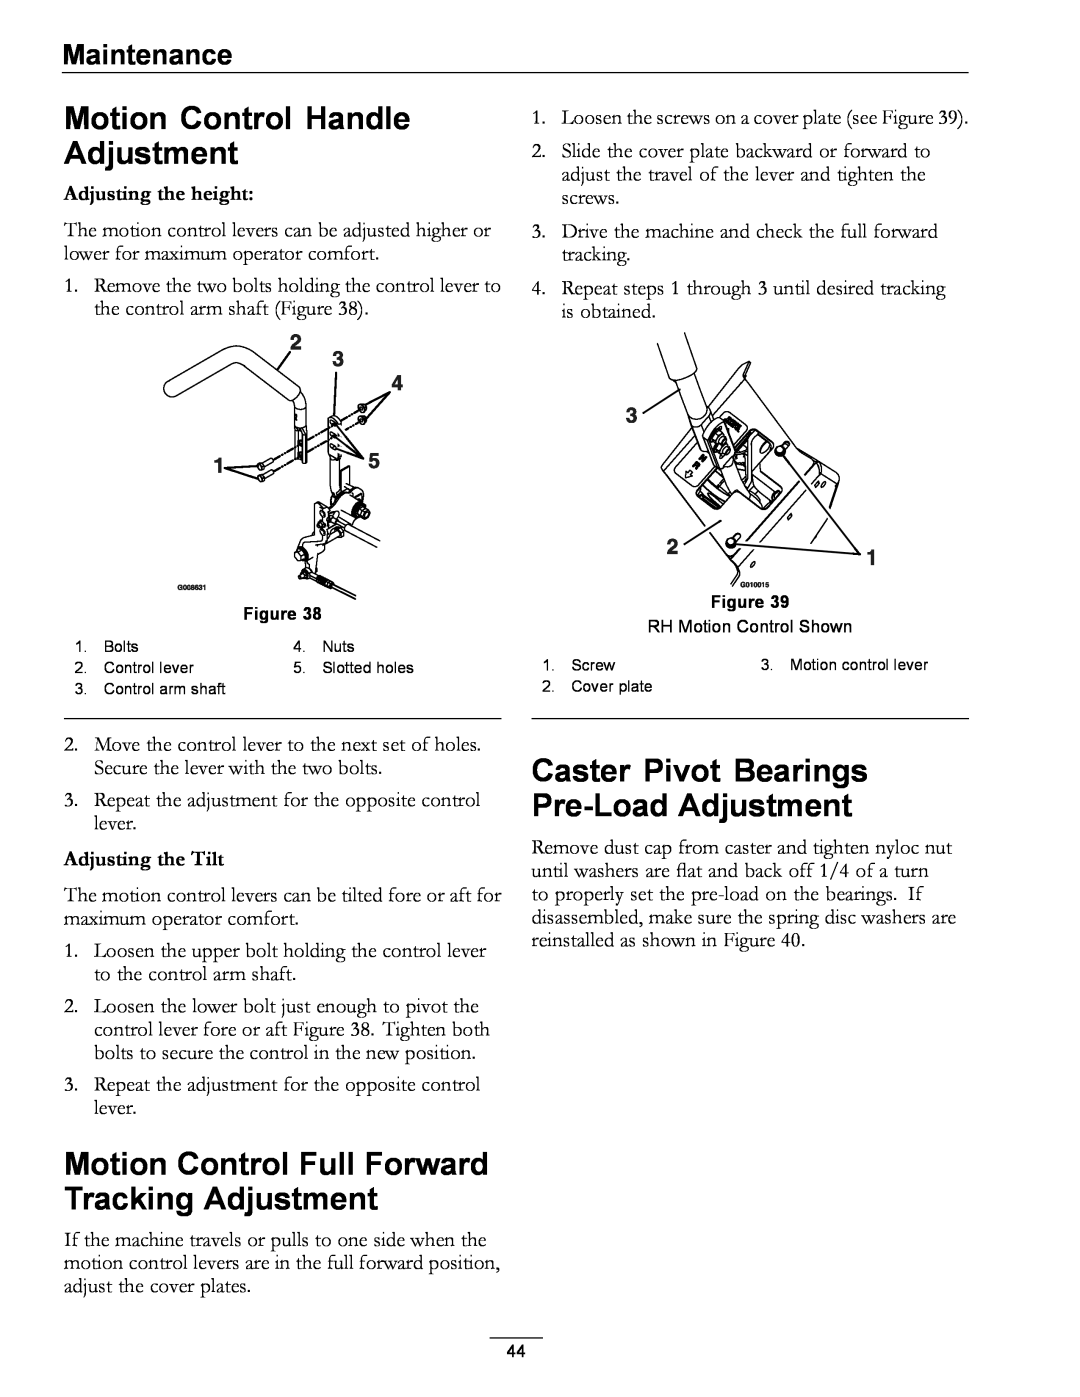 Exmark 000 & higher, 312 manual Motion Control Handle Adjustment, Caster Pivot Bearings Pre-LoadAdjustment, Maintenance 